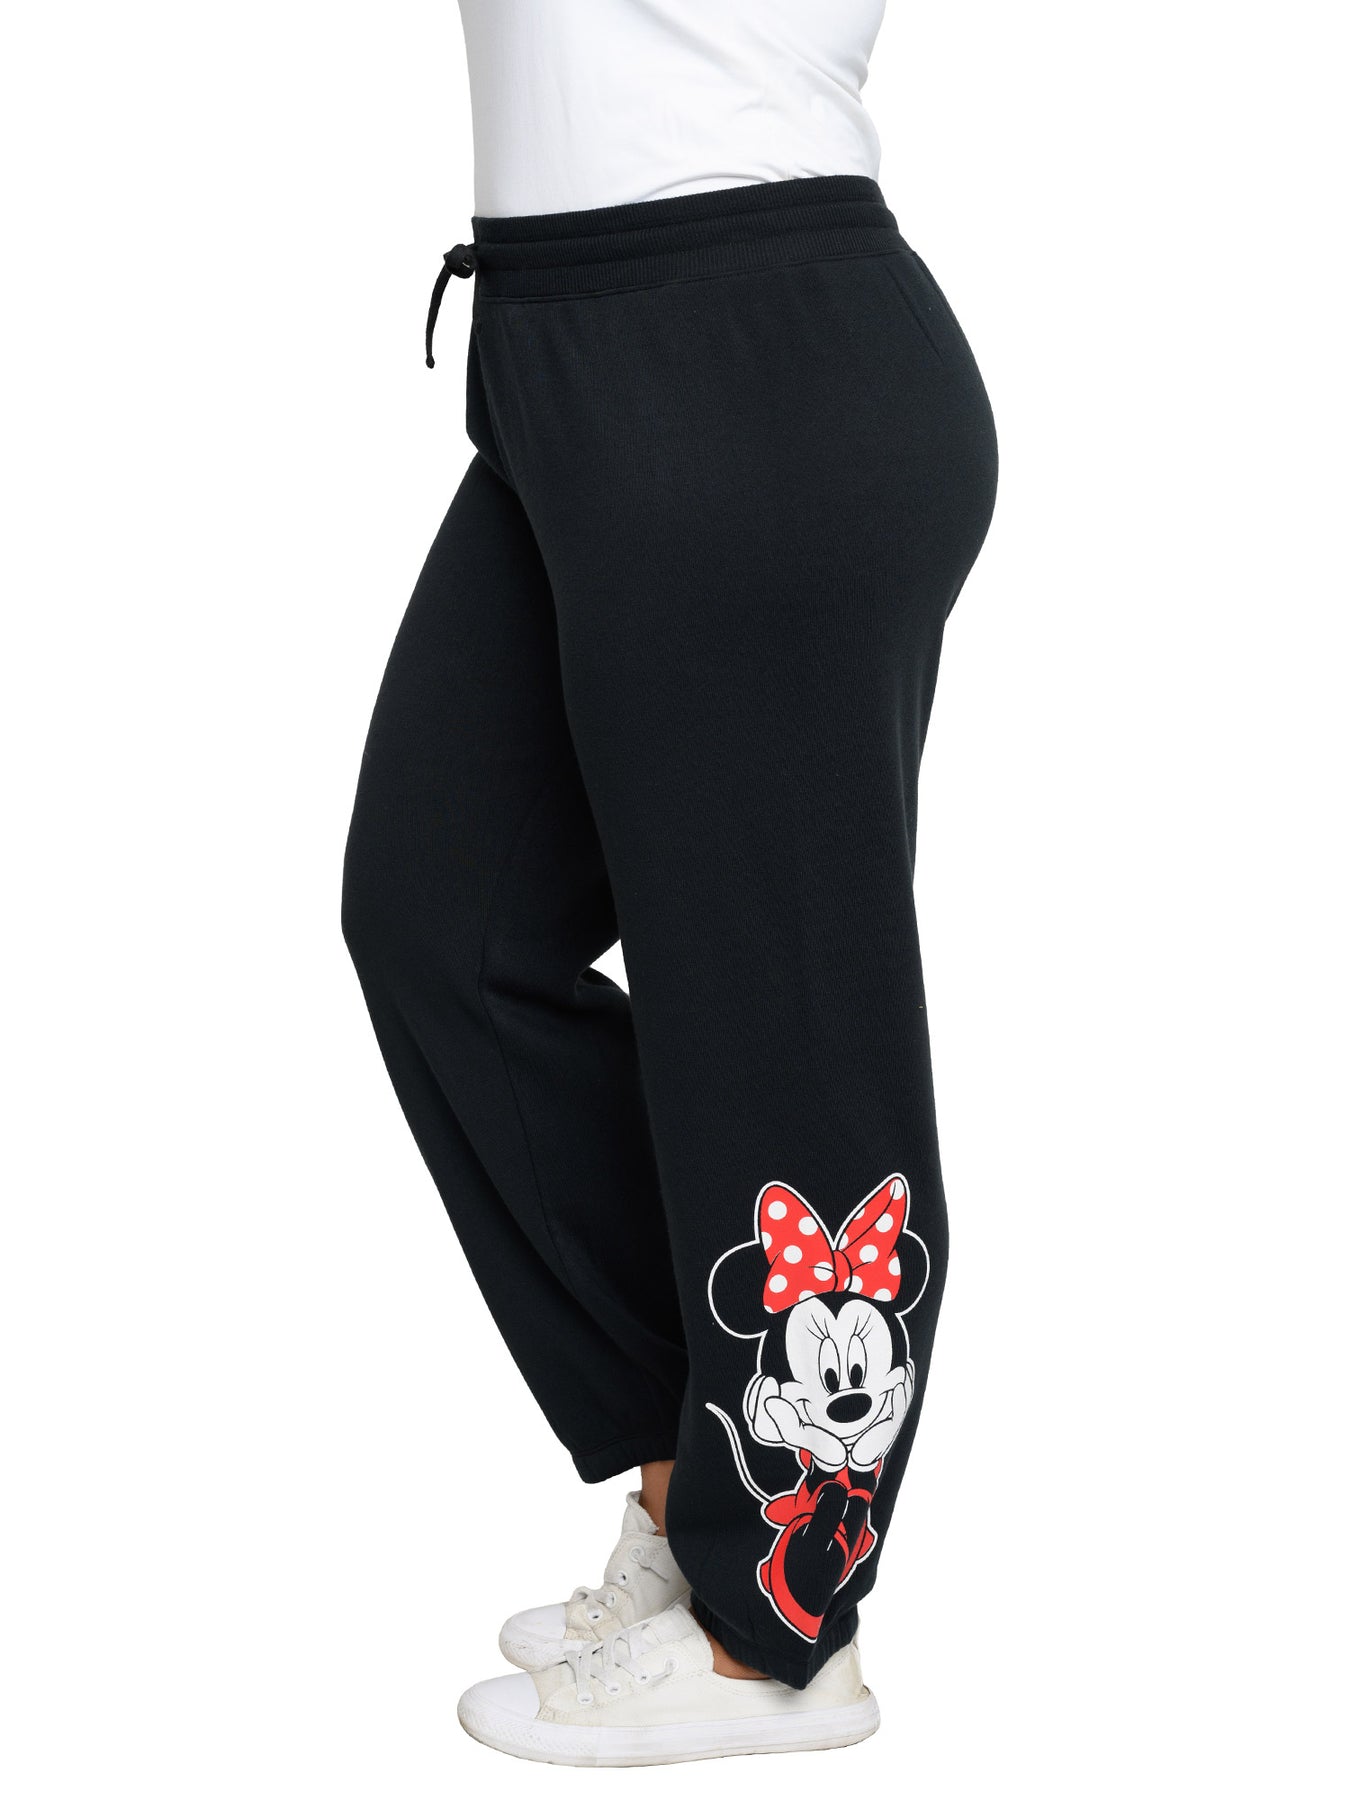 Mickey & Minnie Mouse Hoodie Sweatshirt Front Back Zip Women's Plus Size  Disney